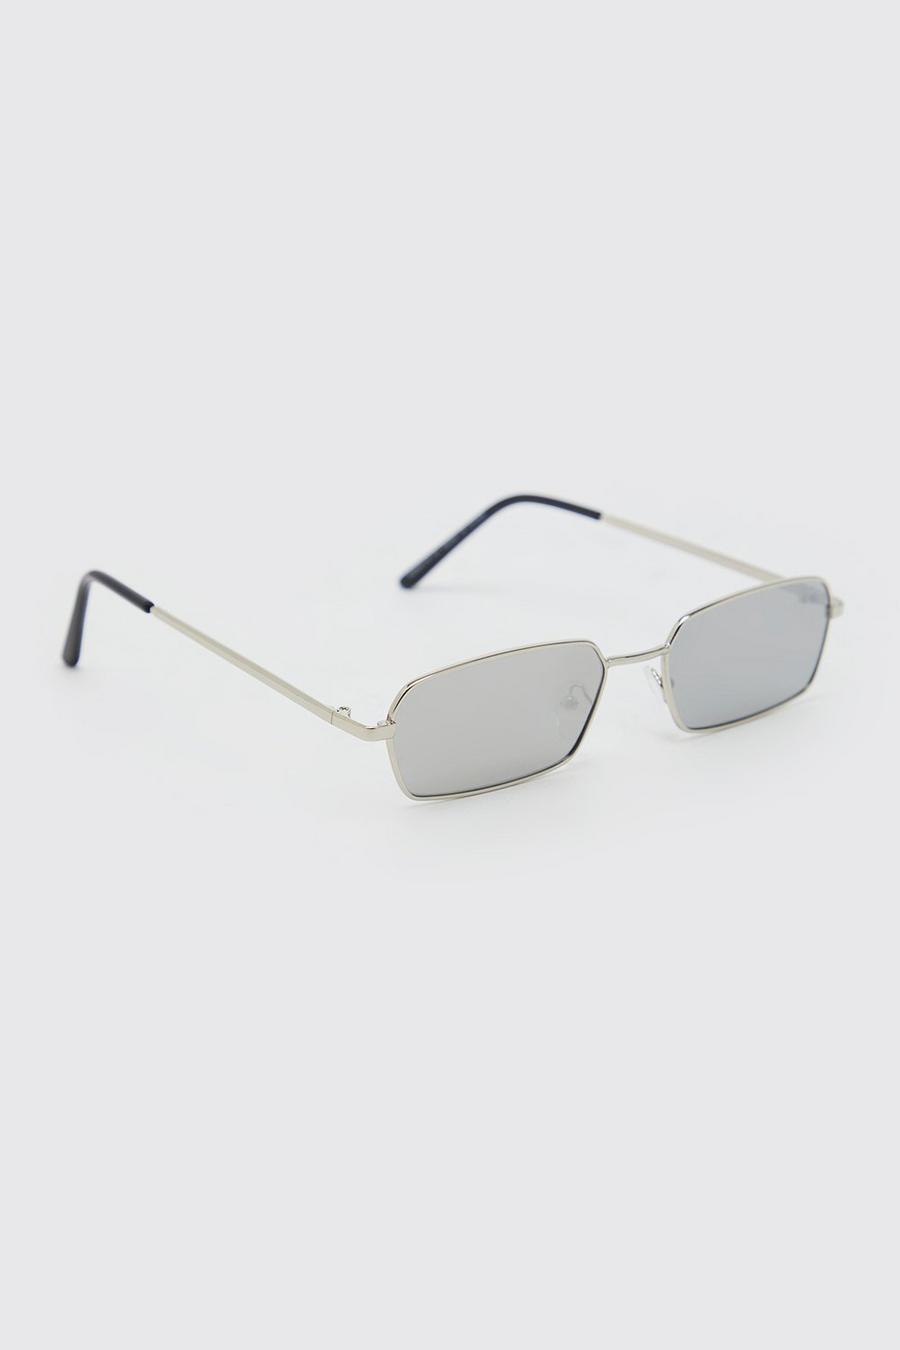 Silver Metal Sunglasses Narrow Hexagon Sunglasses